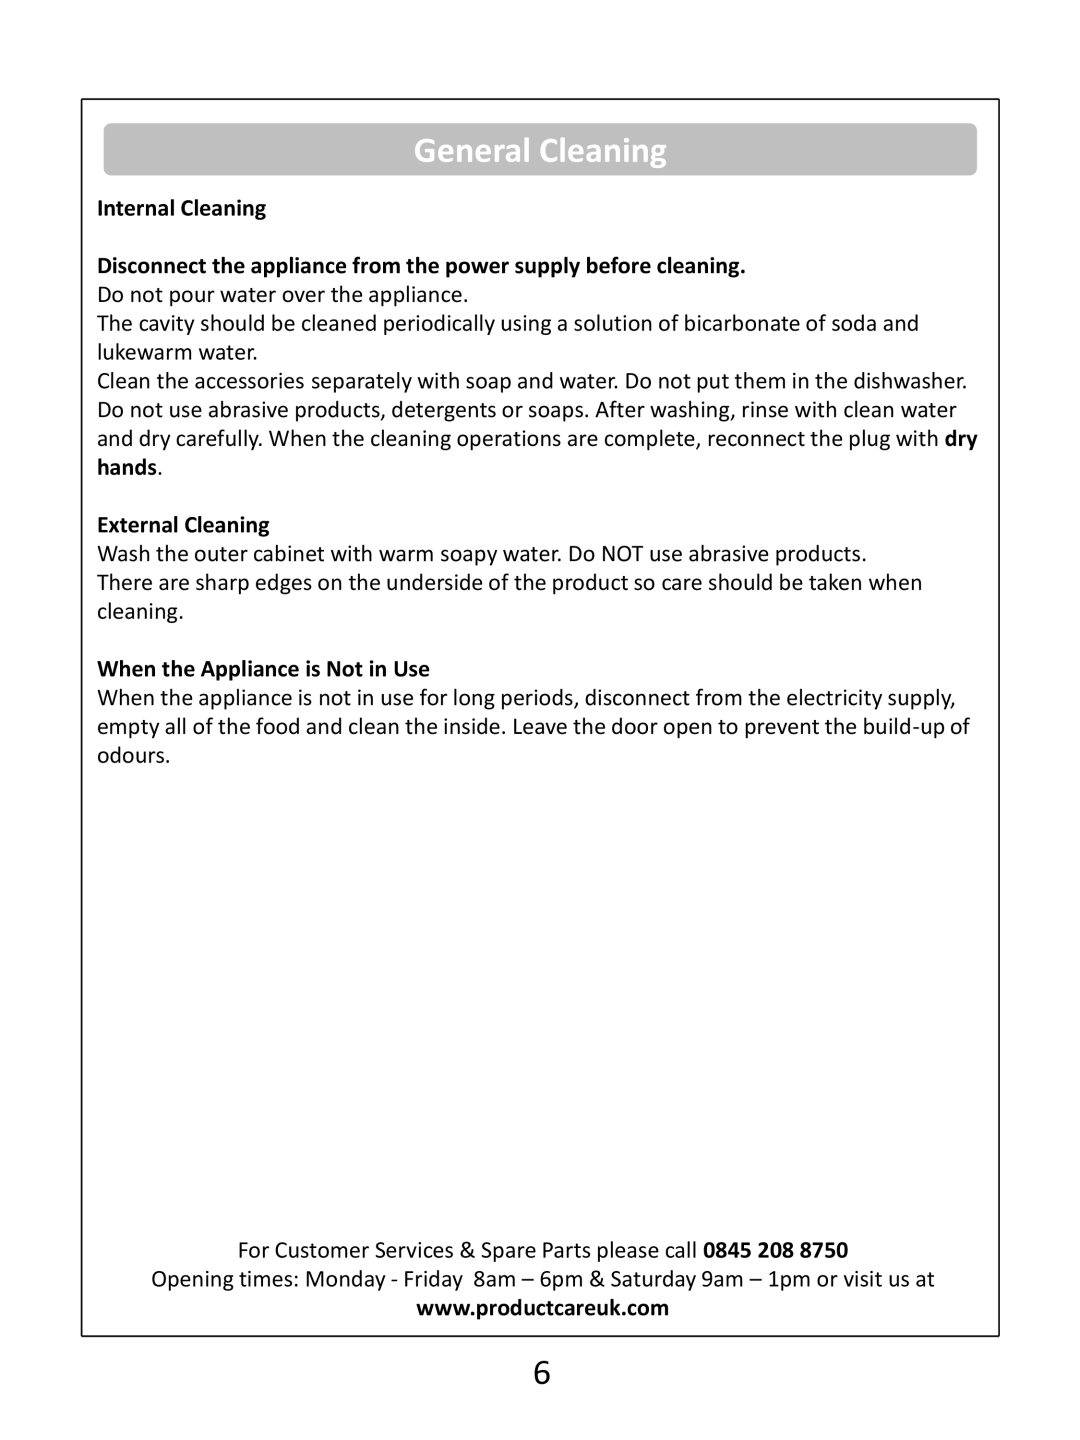 Russell Hobbs RHCF150 General Cleaning, Internal Cleaning, External Cleaning, When the Appliance is Not in Use 